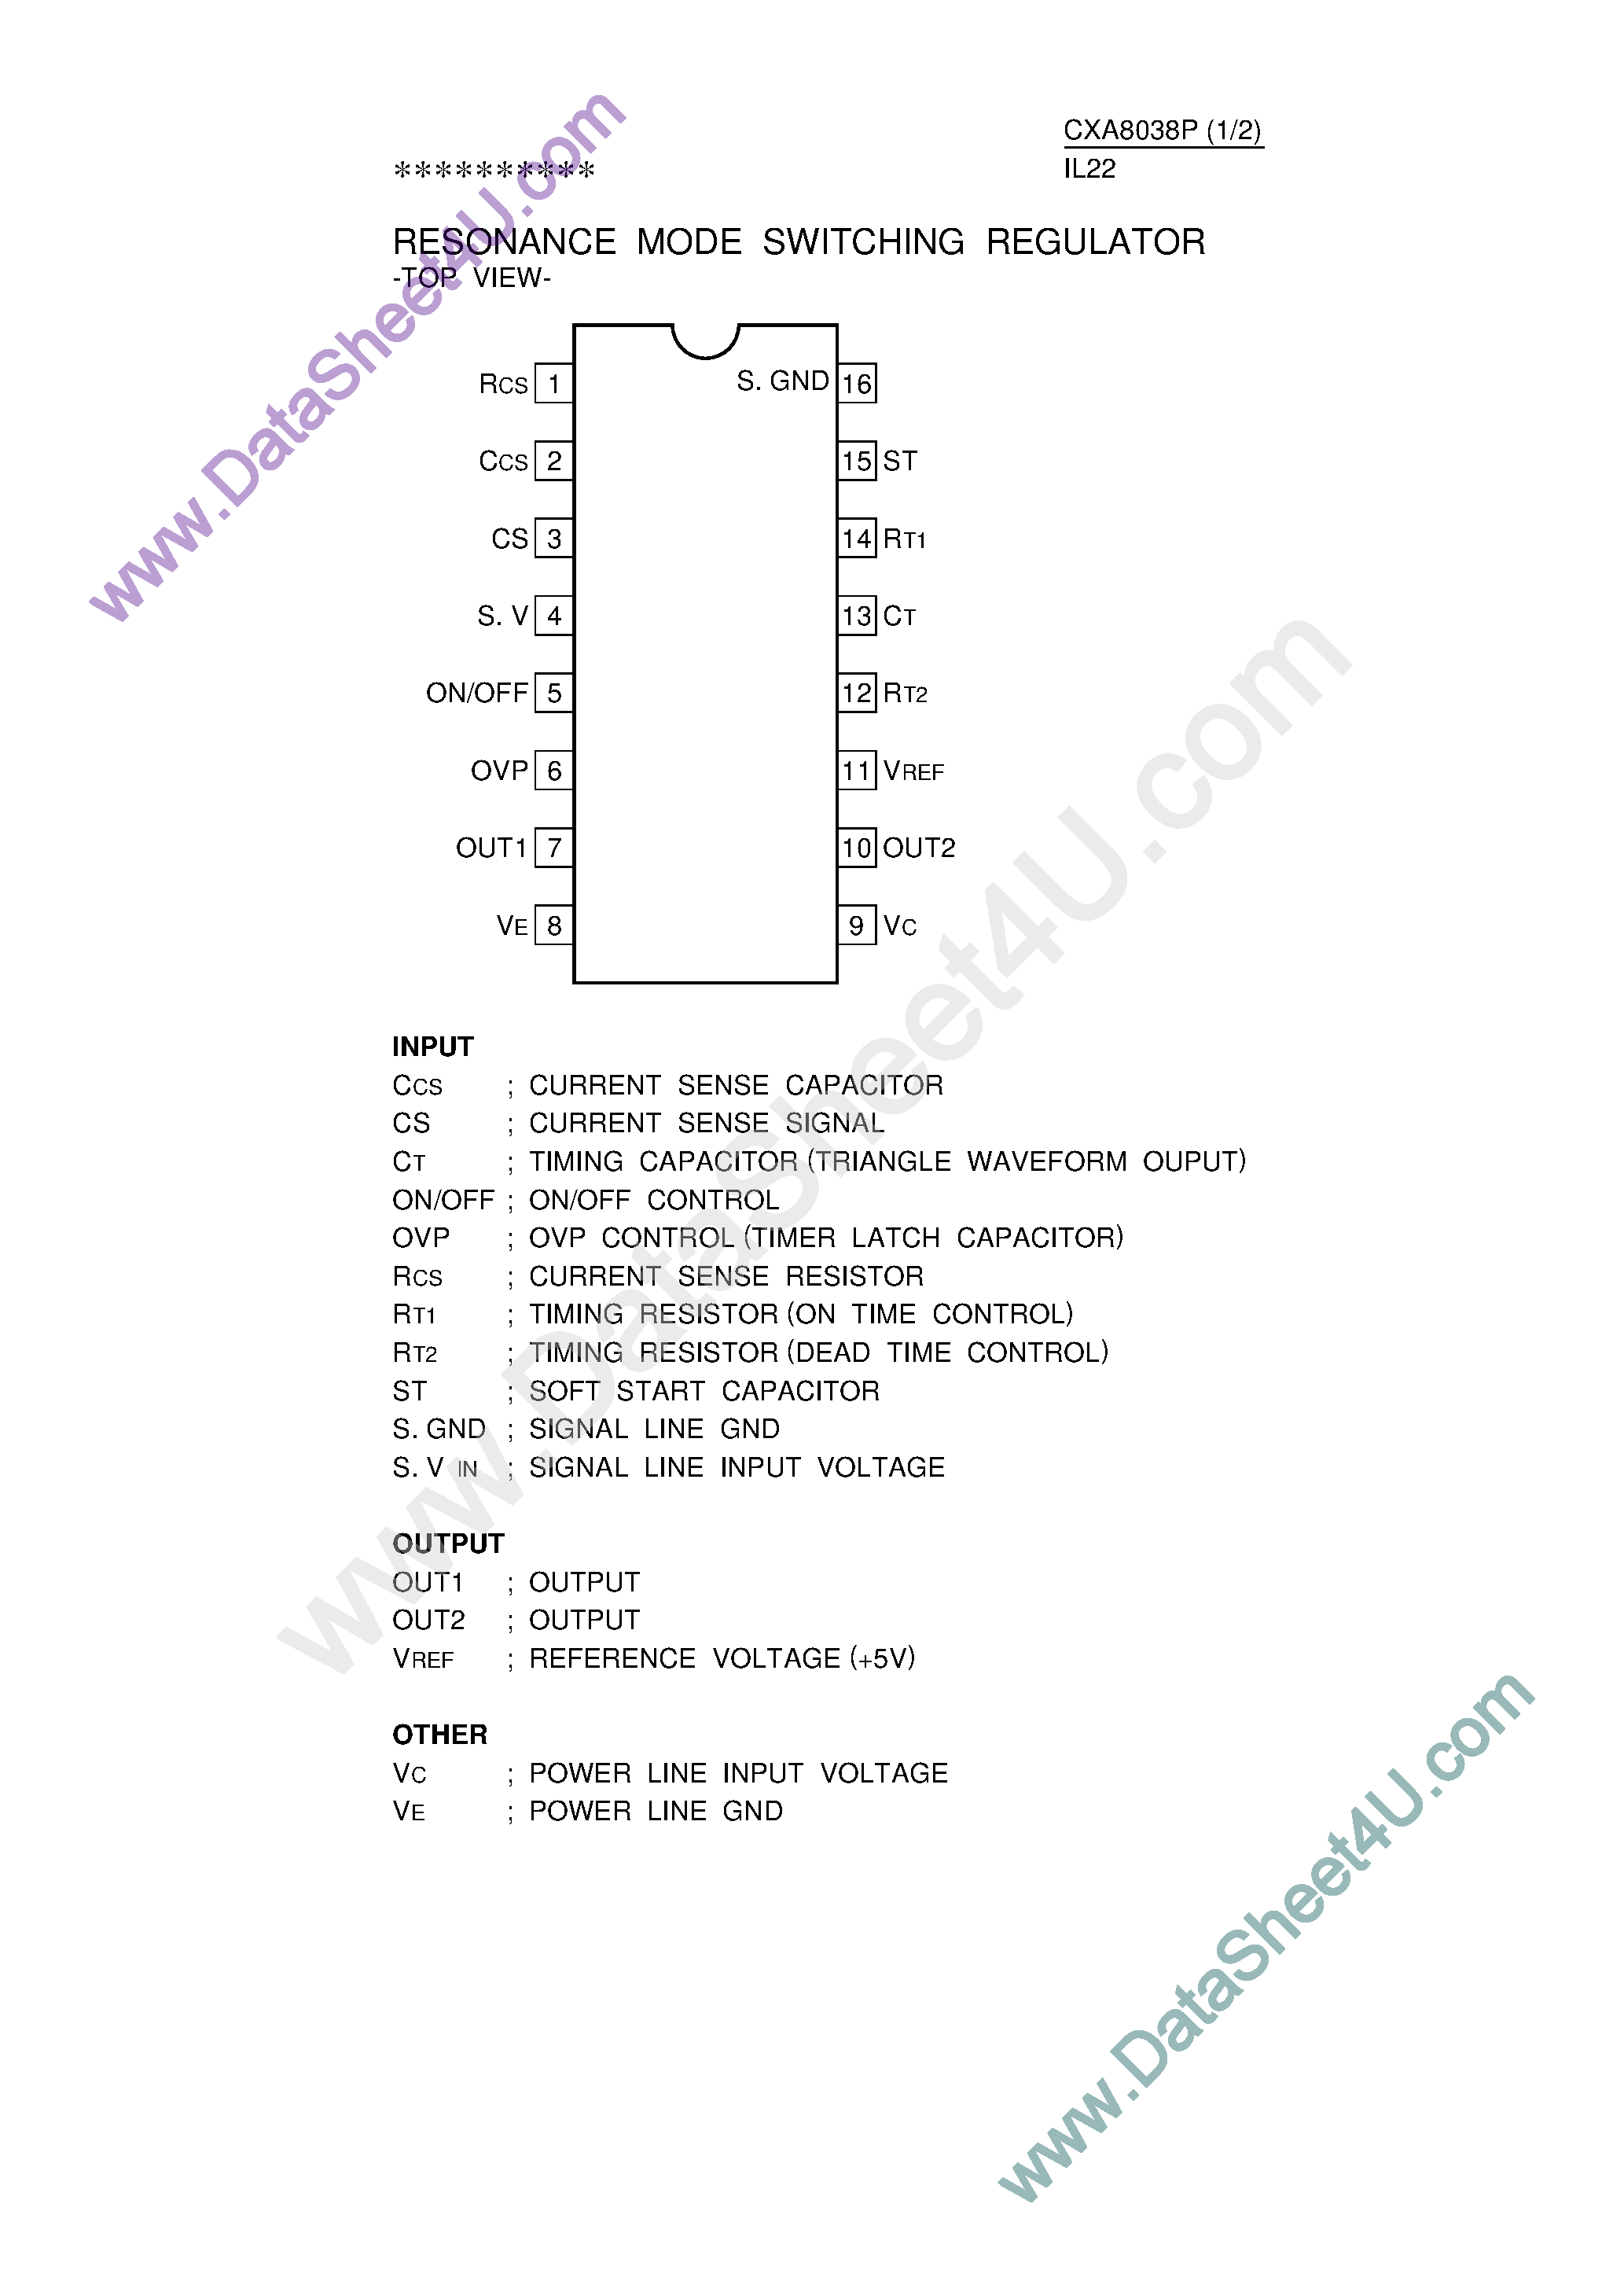 Даташит CXA8038P - Resonance Mode Switching Regulator страница 1